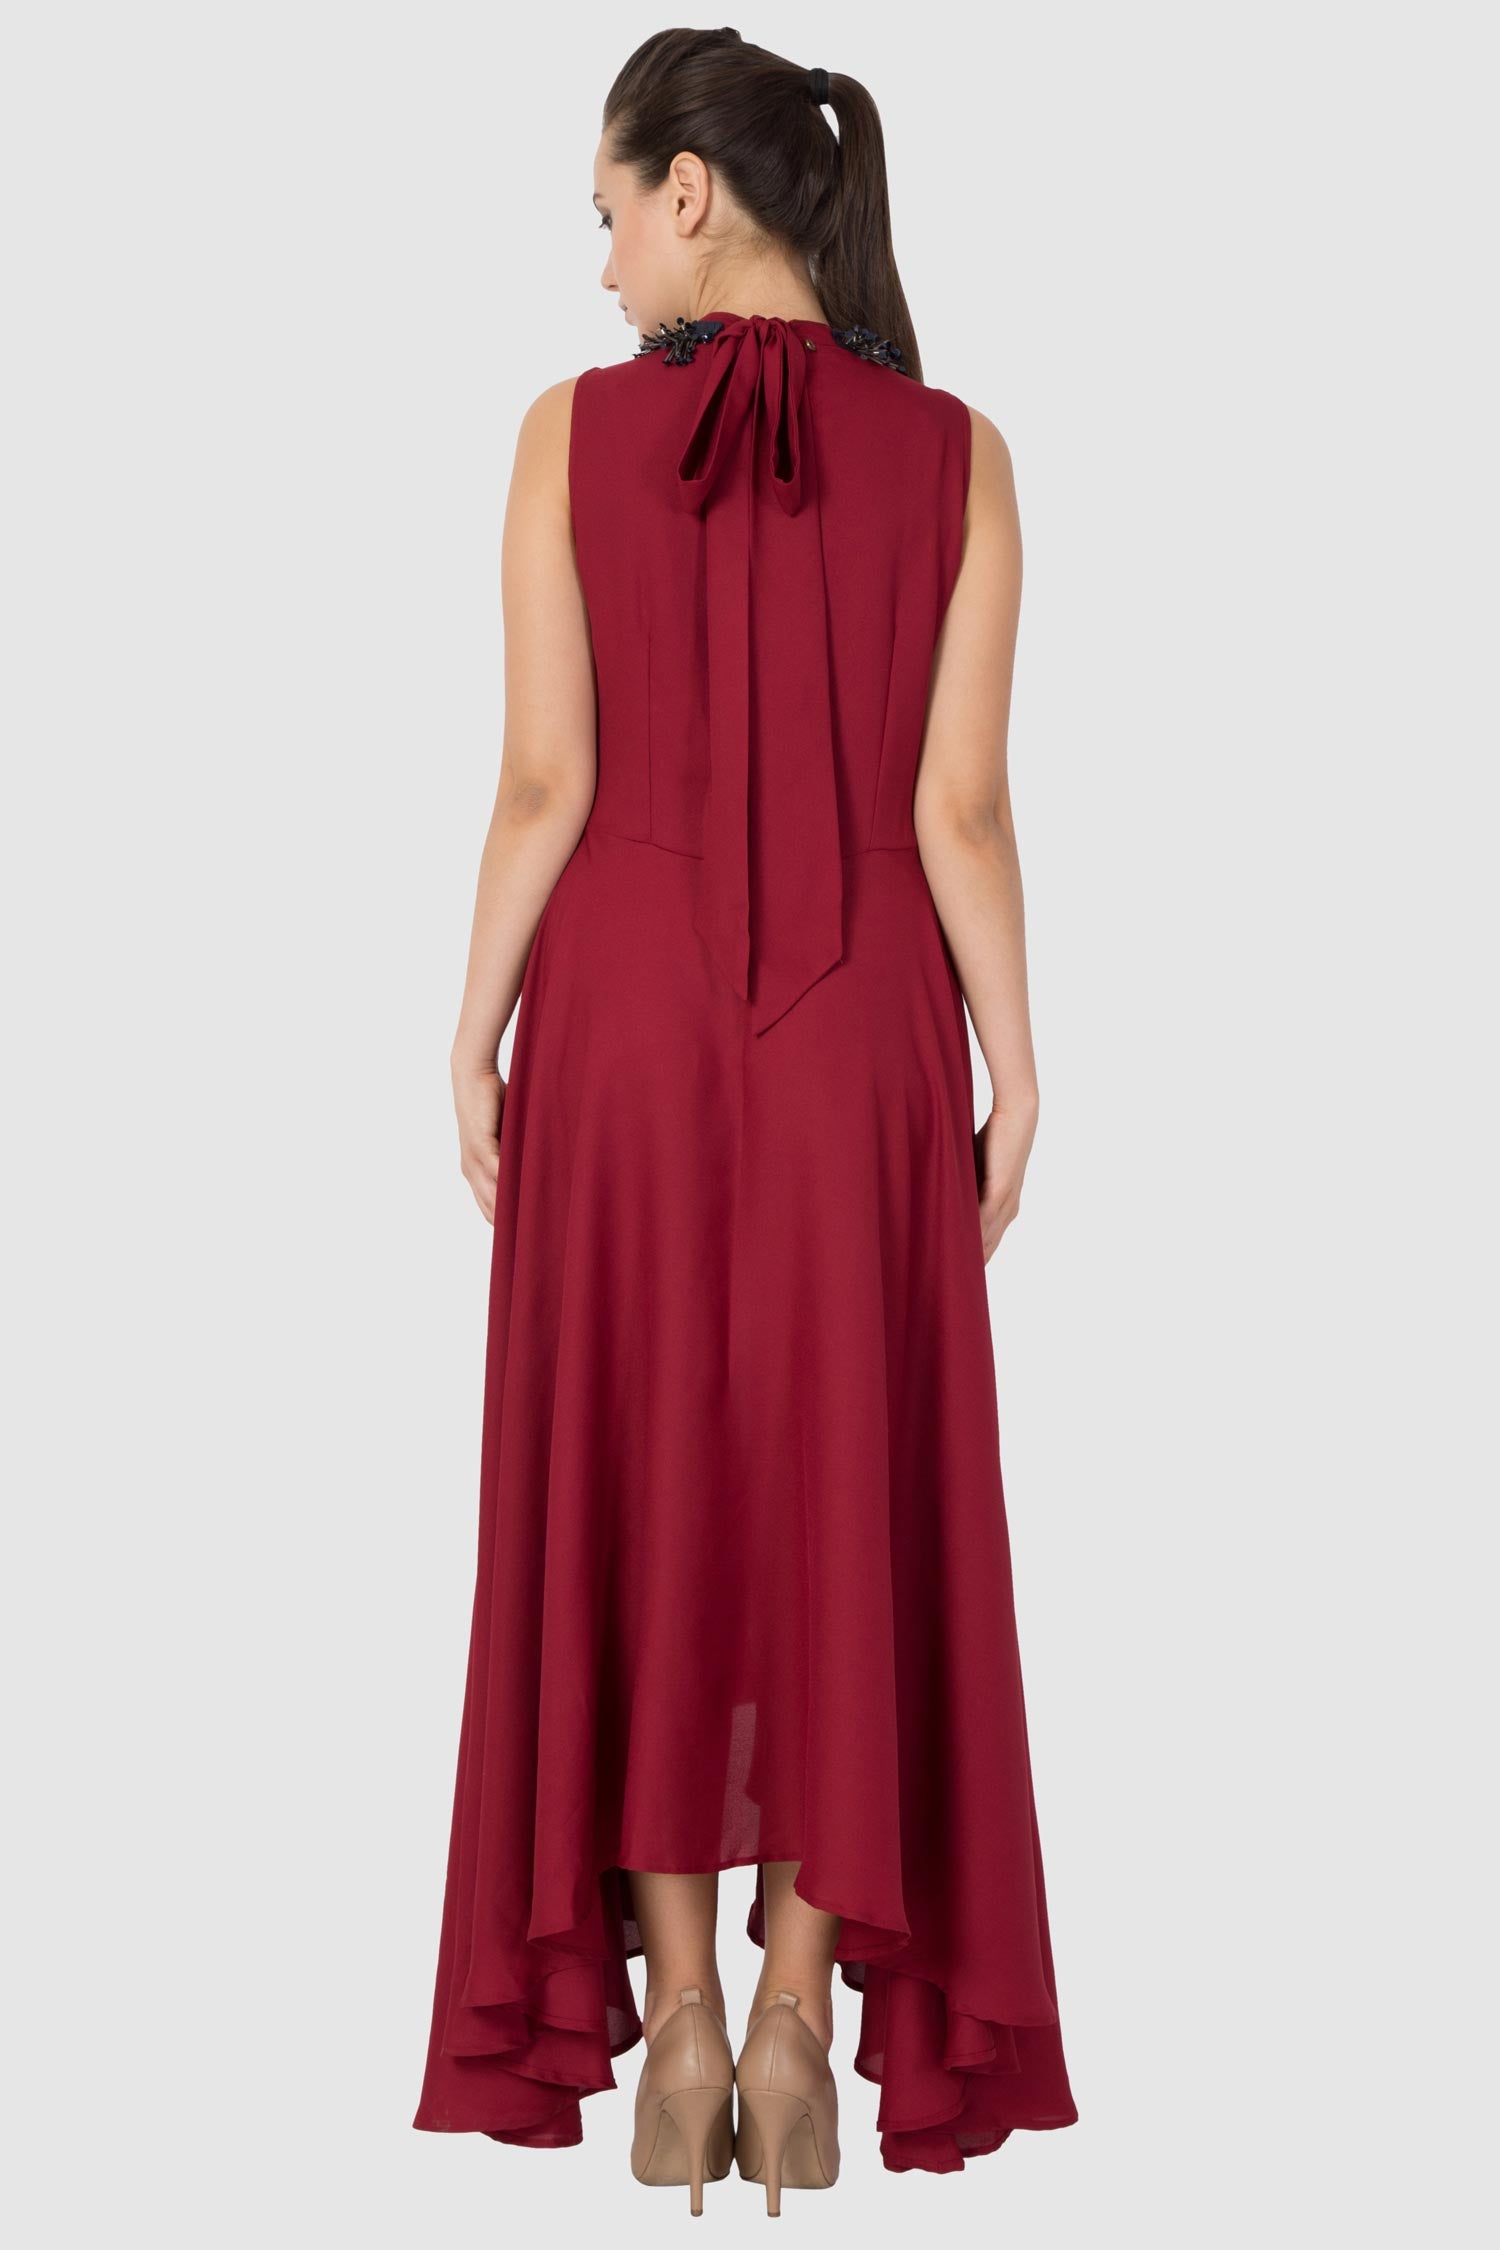 Wine Red Embroidered Handkerchief Dress